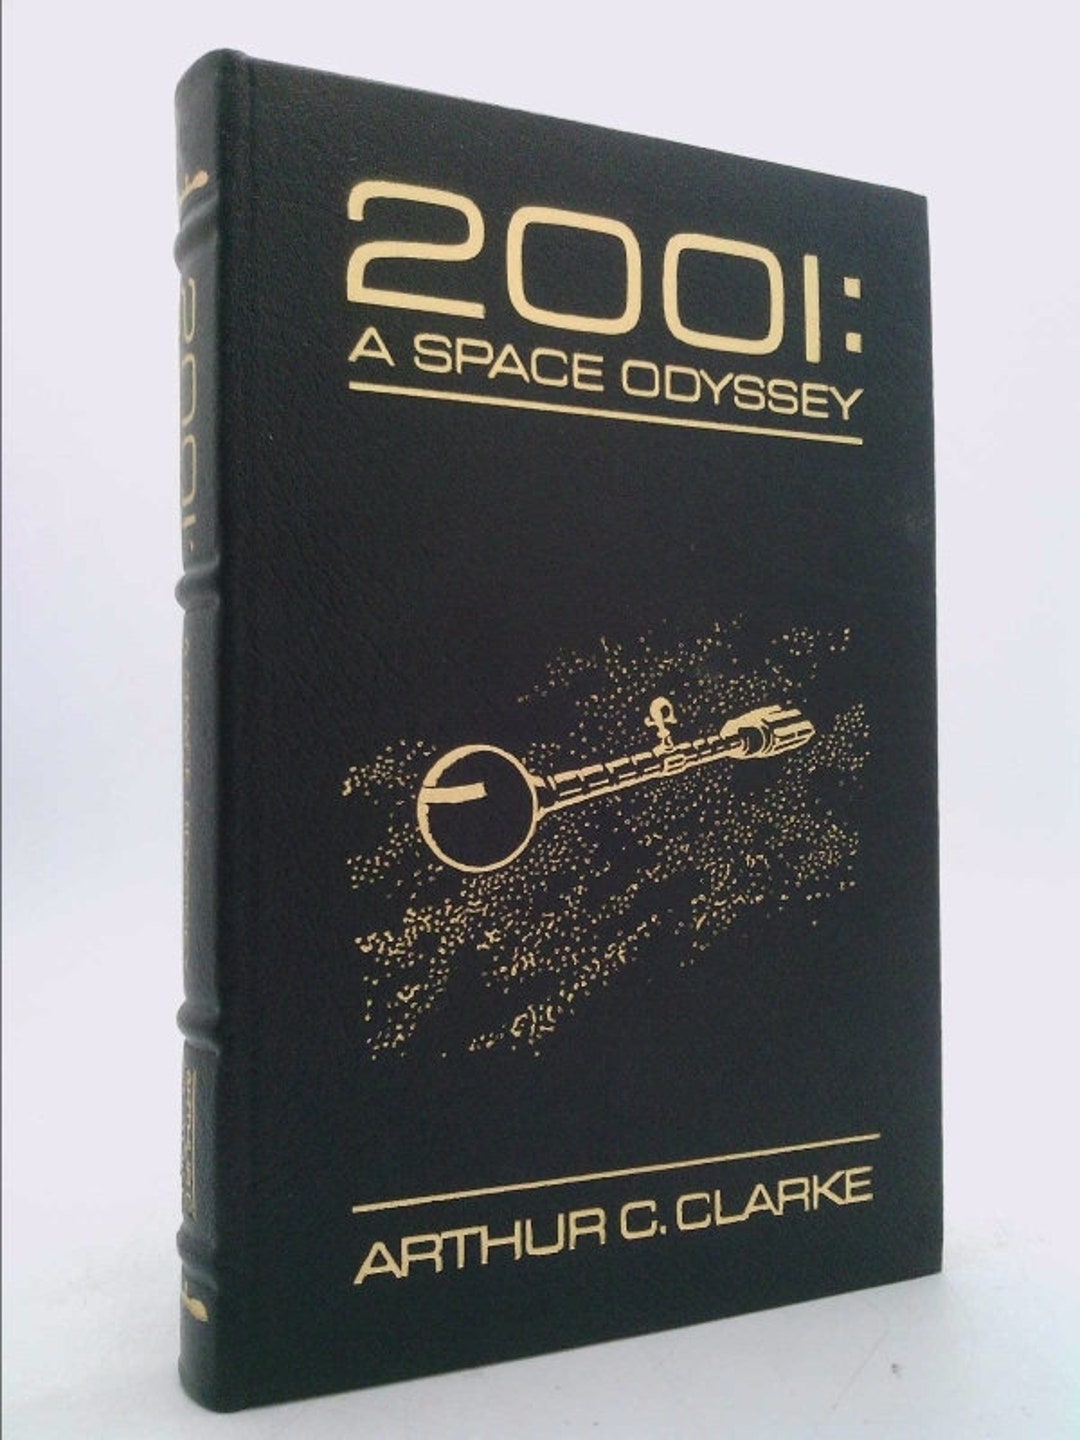 2001: A Space Odyssey by Arthur C. Clarke - Etsy